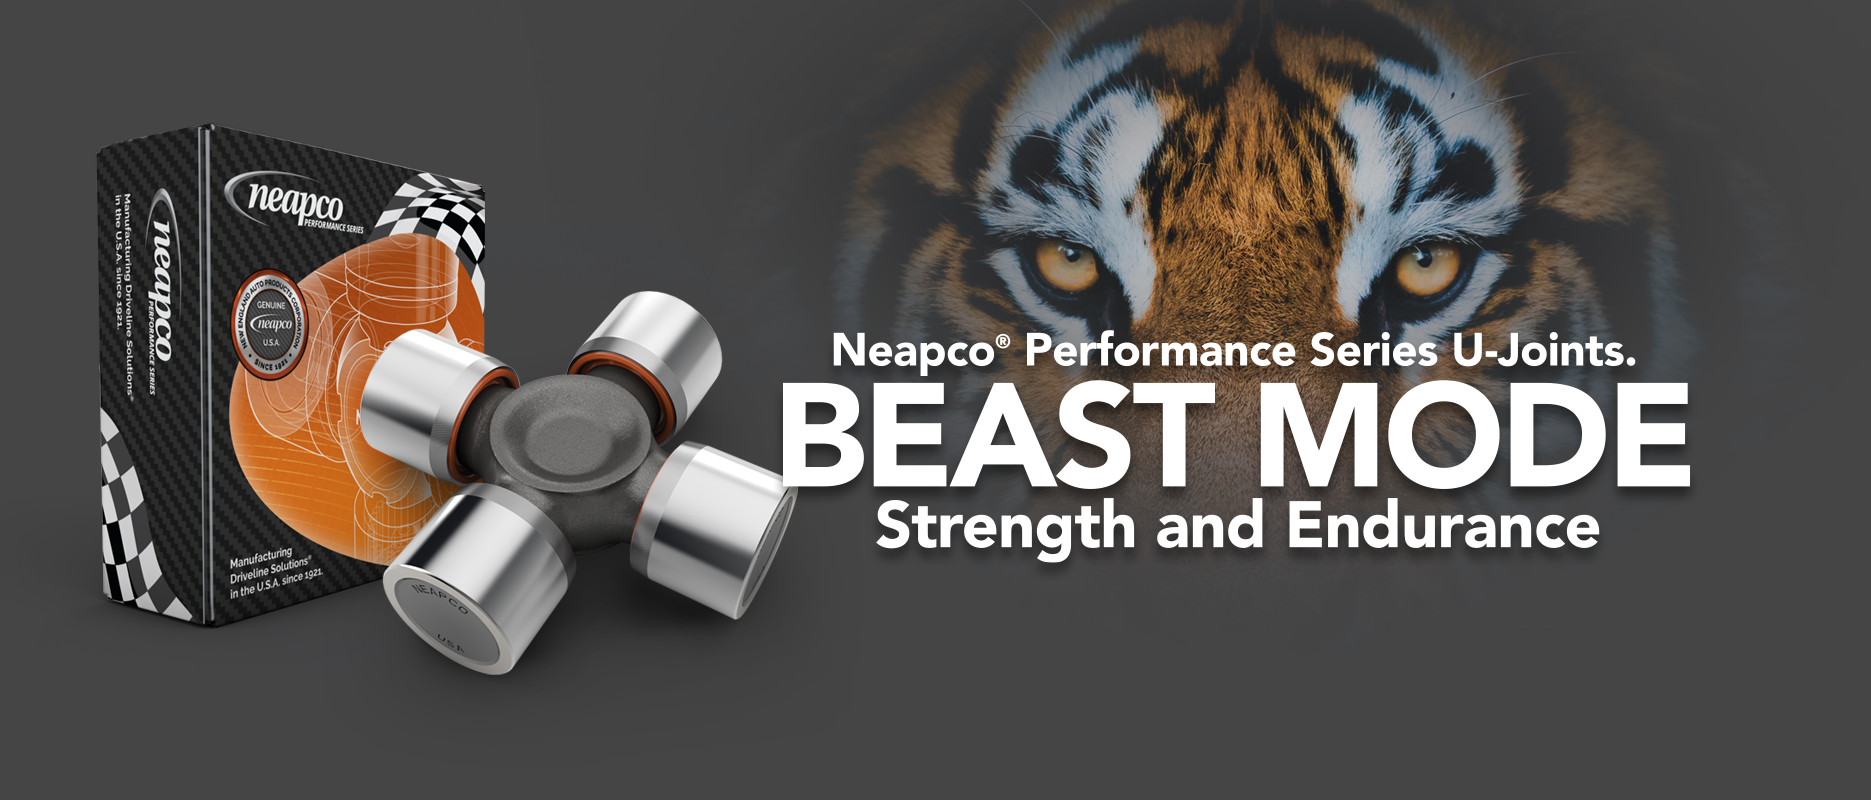 Neapco beast mode image